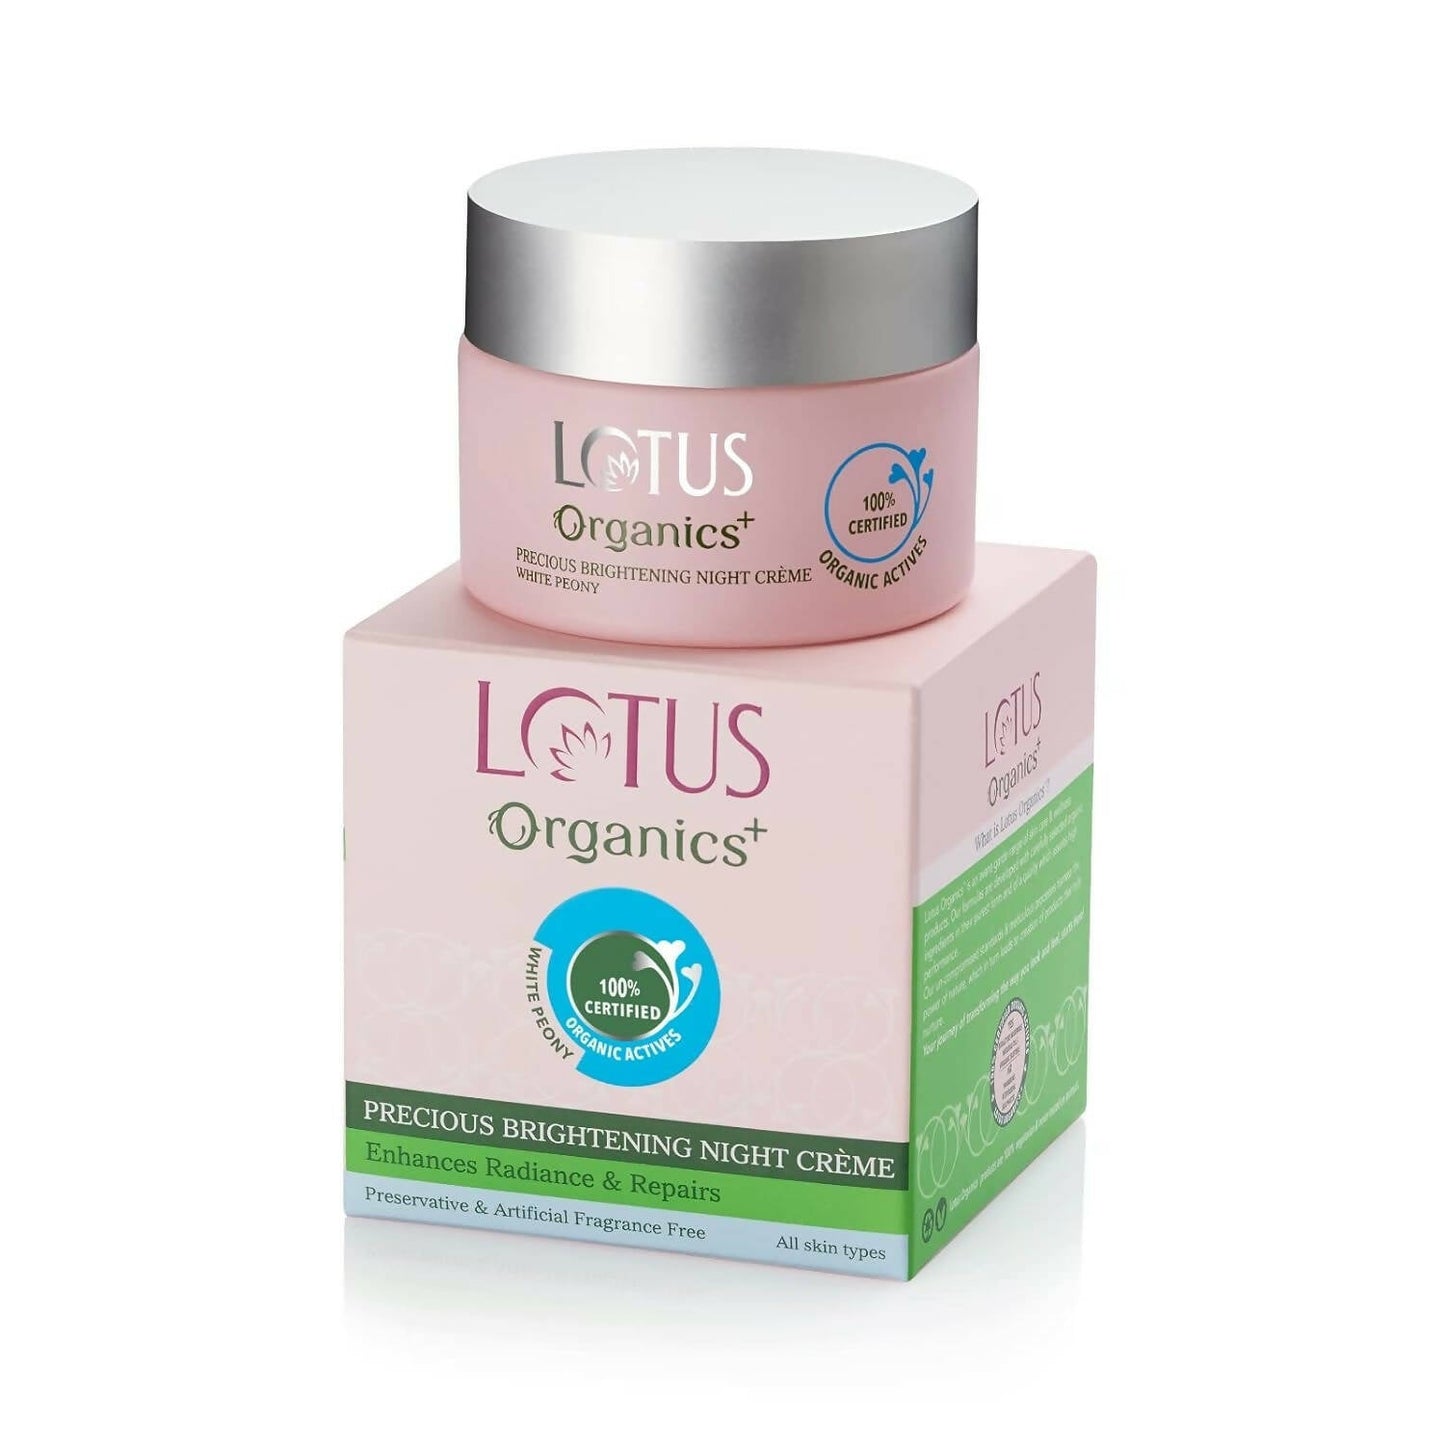 Lotus Organics+ Precious Brightening Night Cream